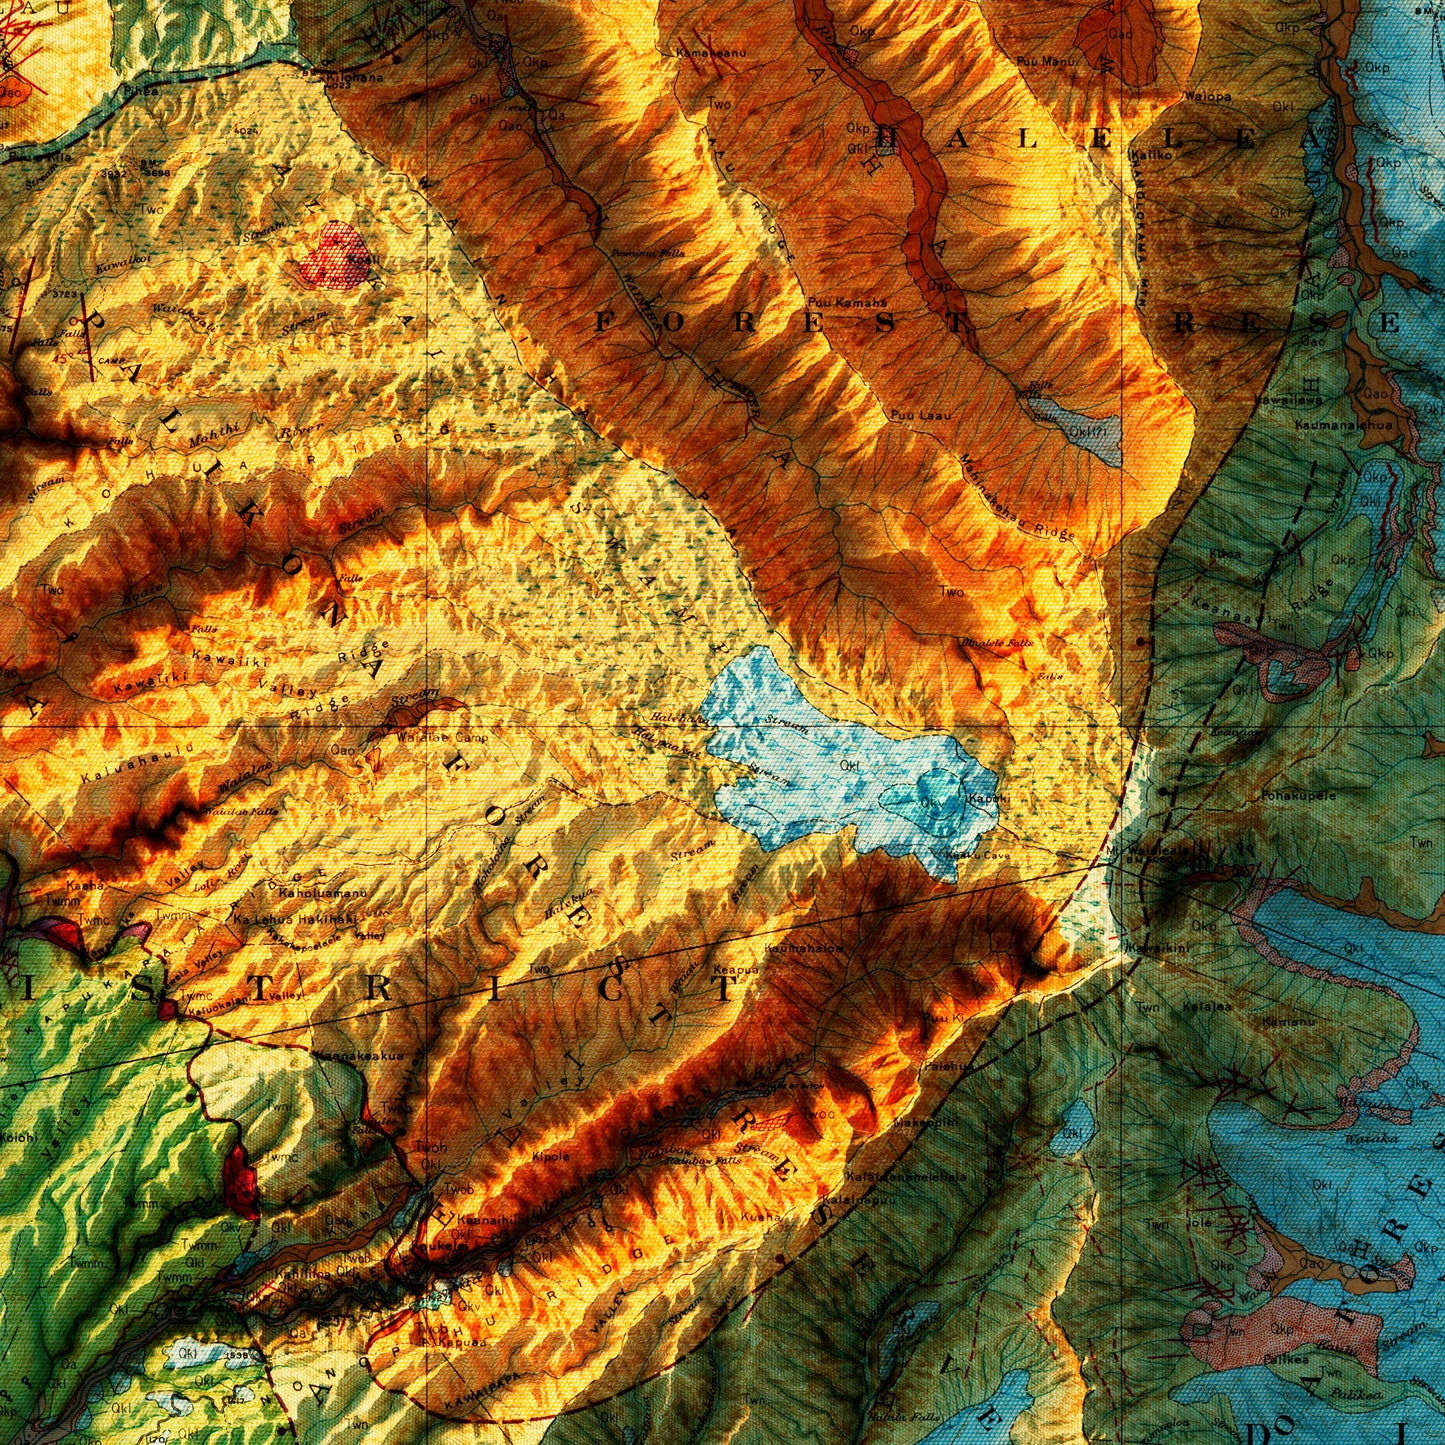 Kauai 1960 Geologic Shaded Relief Map